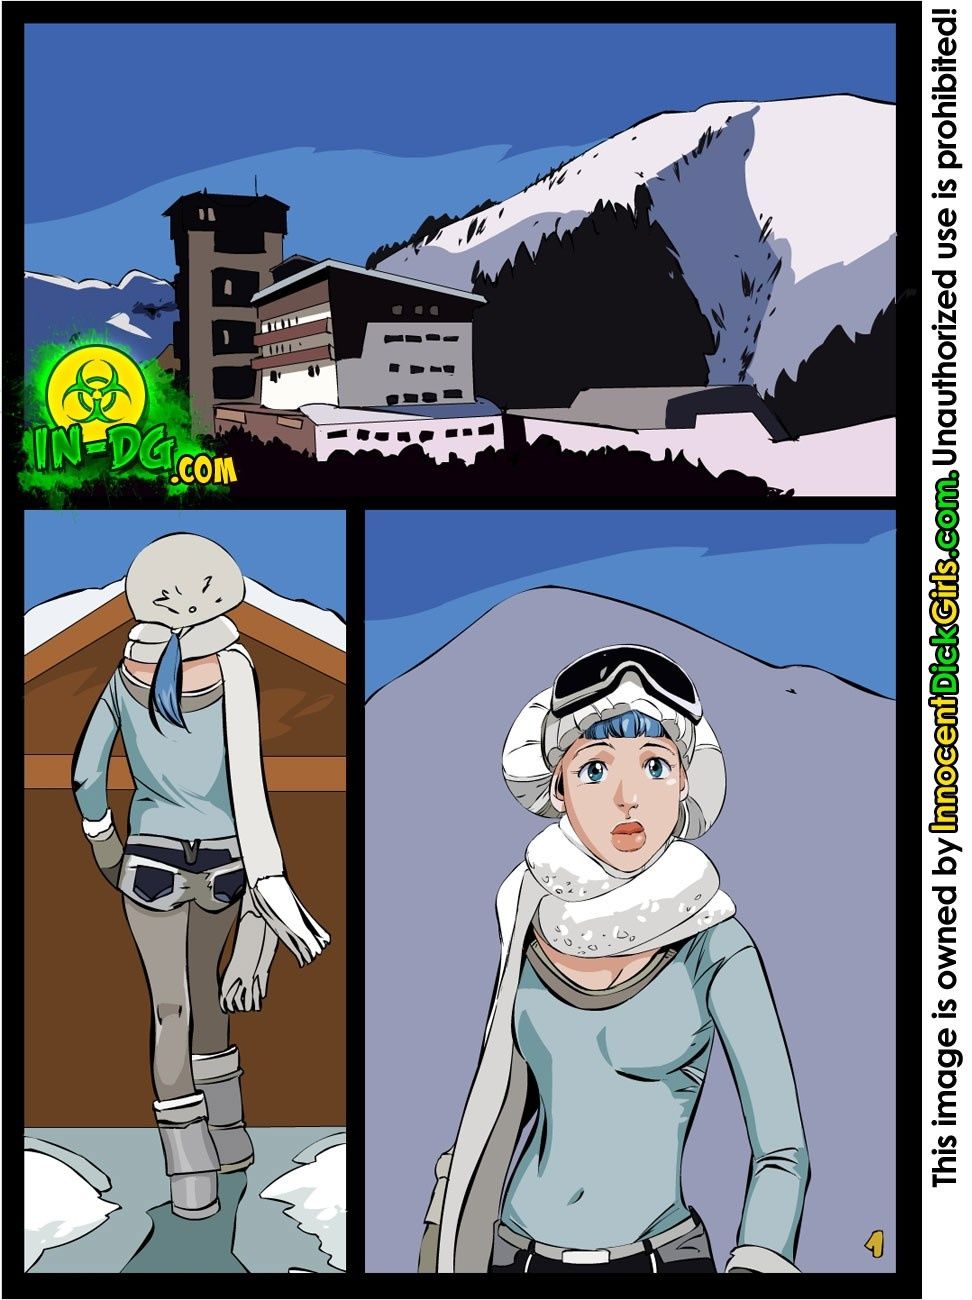 The Free Ski Pass page 2